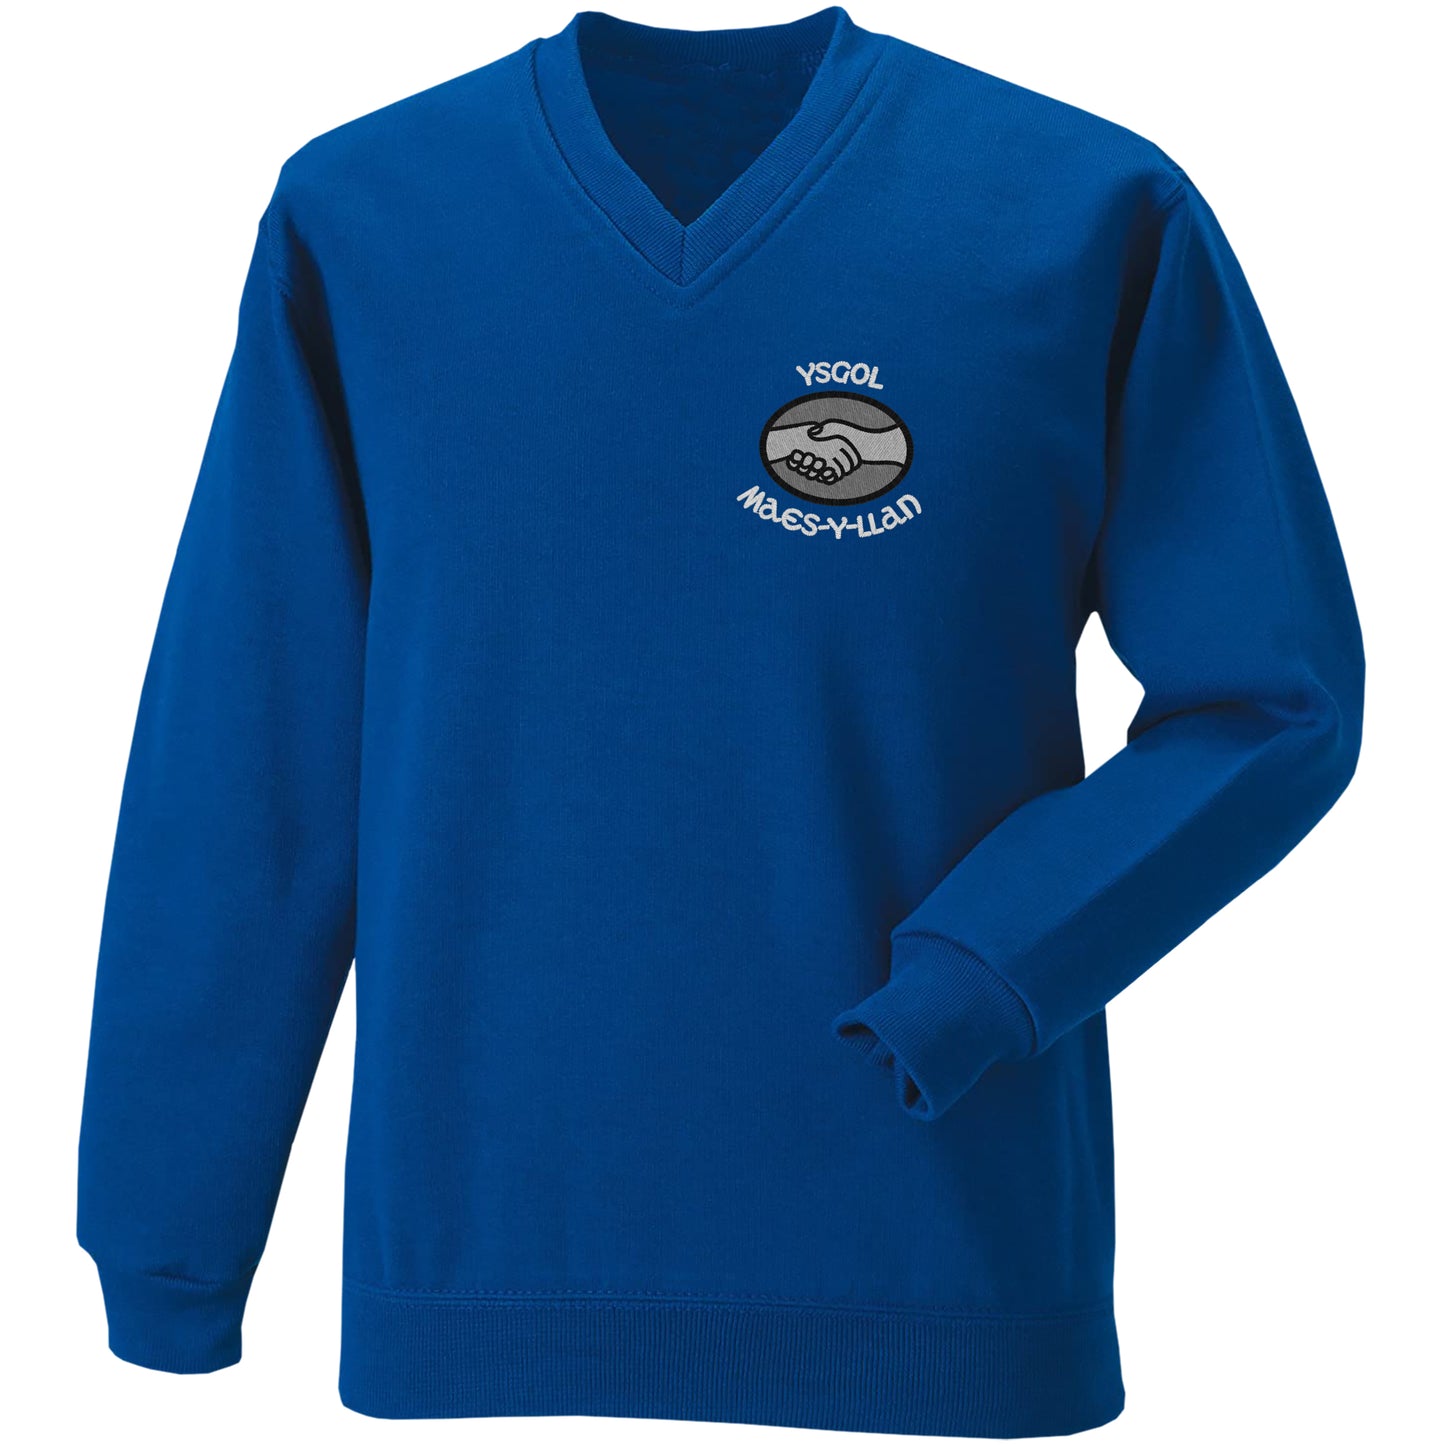 Ysgol Maes-y-Llan  Sweaters are supplied by Ourschoolwear of Wrexham